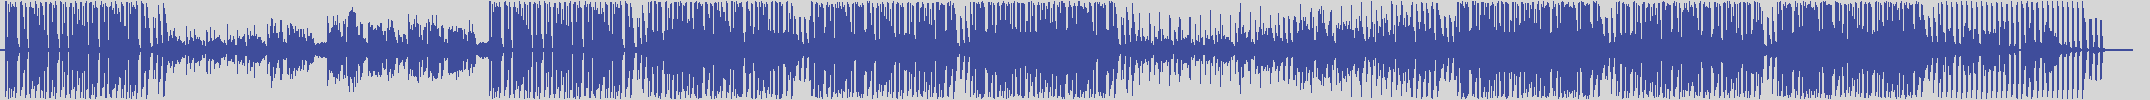 nf_boyz_records [NFY043] Filter Beats - New Prank [Soullovers Mix] audio wave form